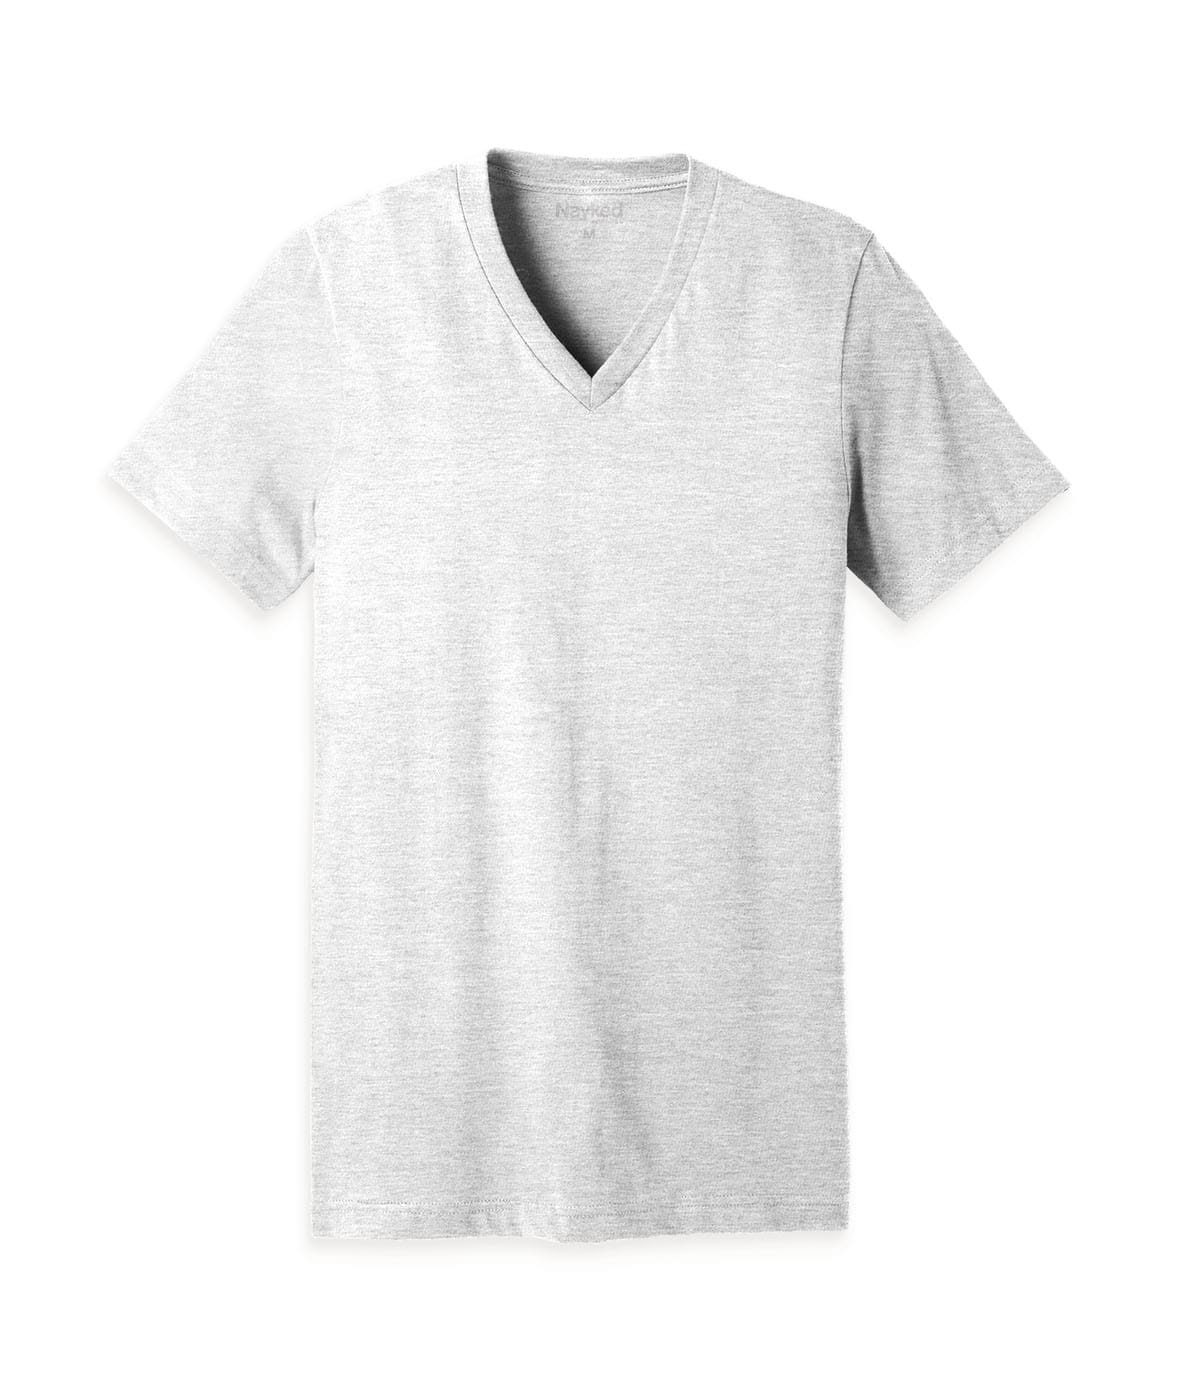 Men's Classic Cotton Short Sleeve V-Neck T-Shirt Worn by Model